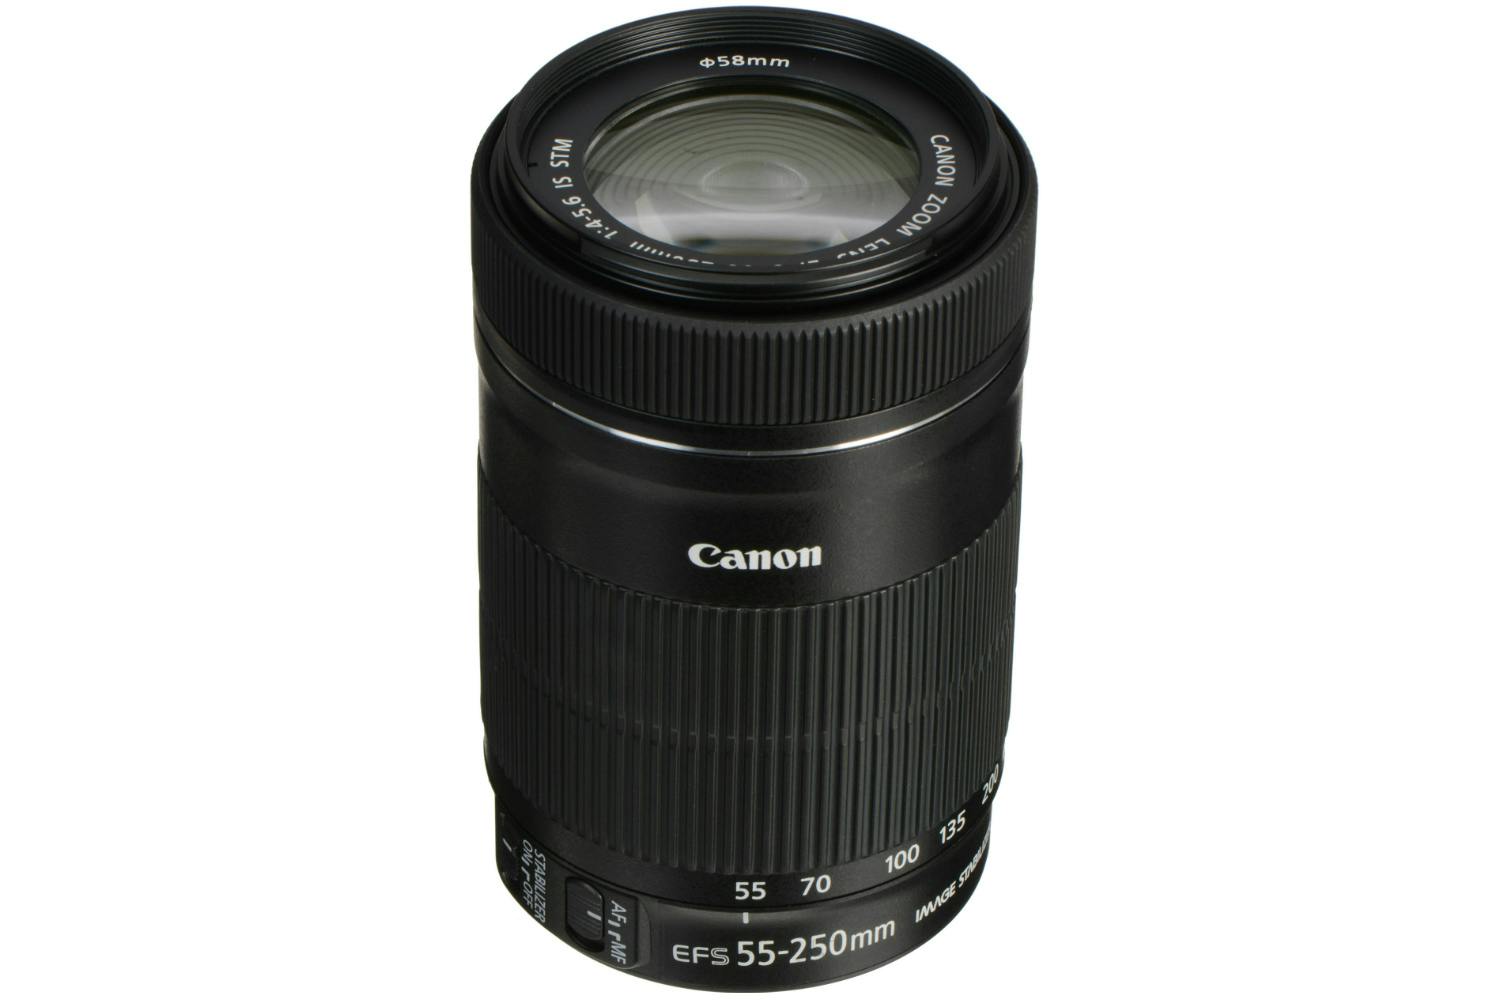 Canon EF-S 55-250mm f/4-5.6 IS STM Lens